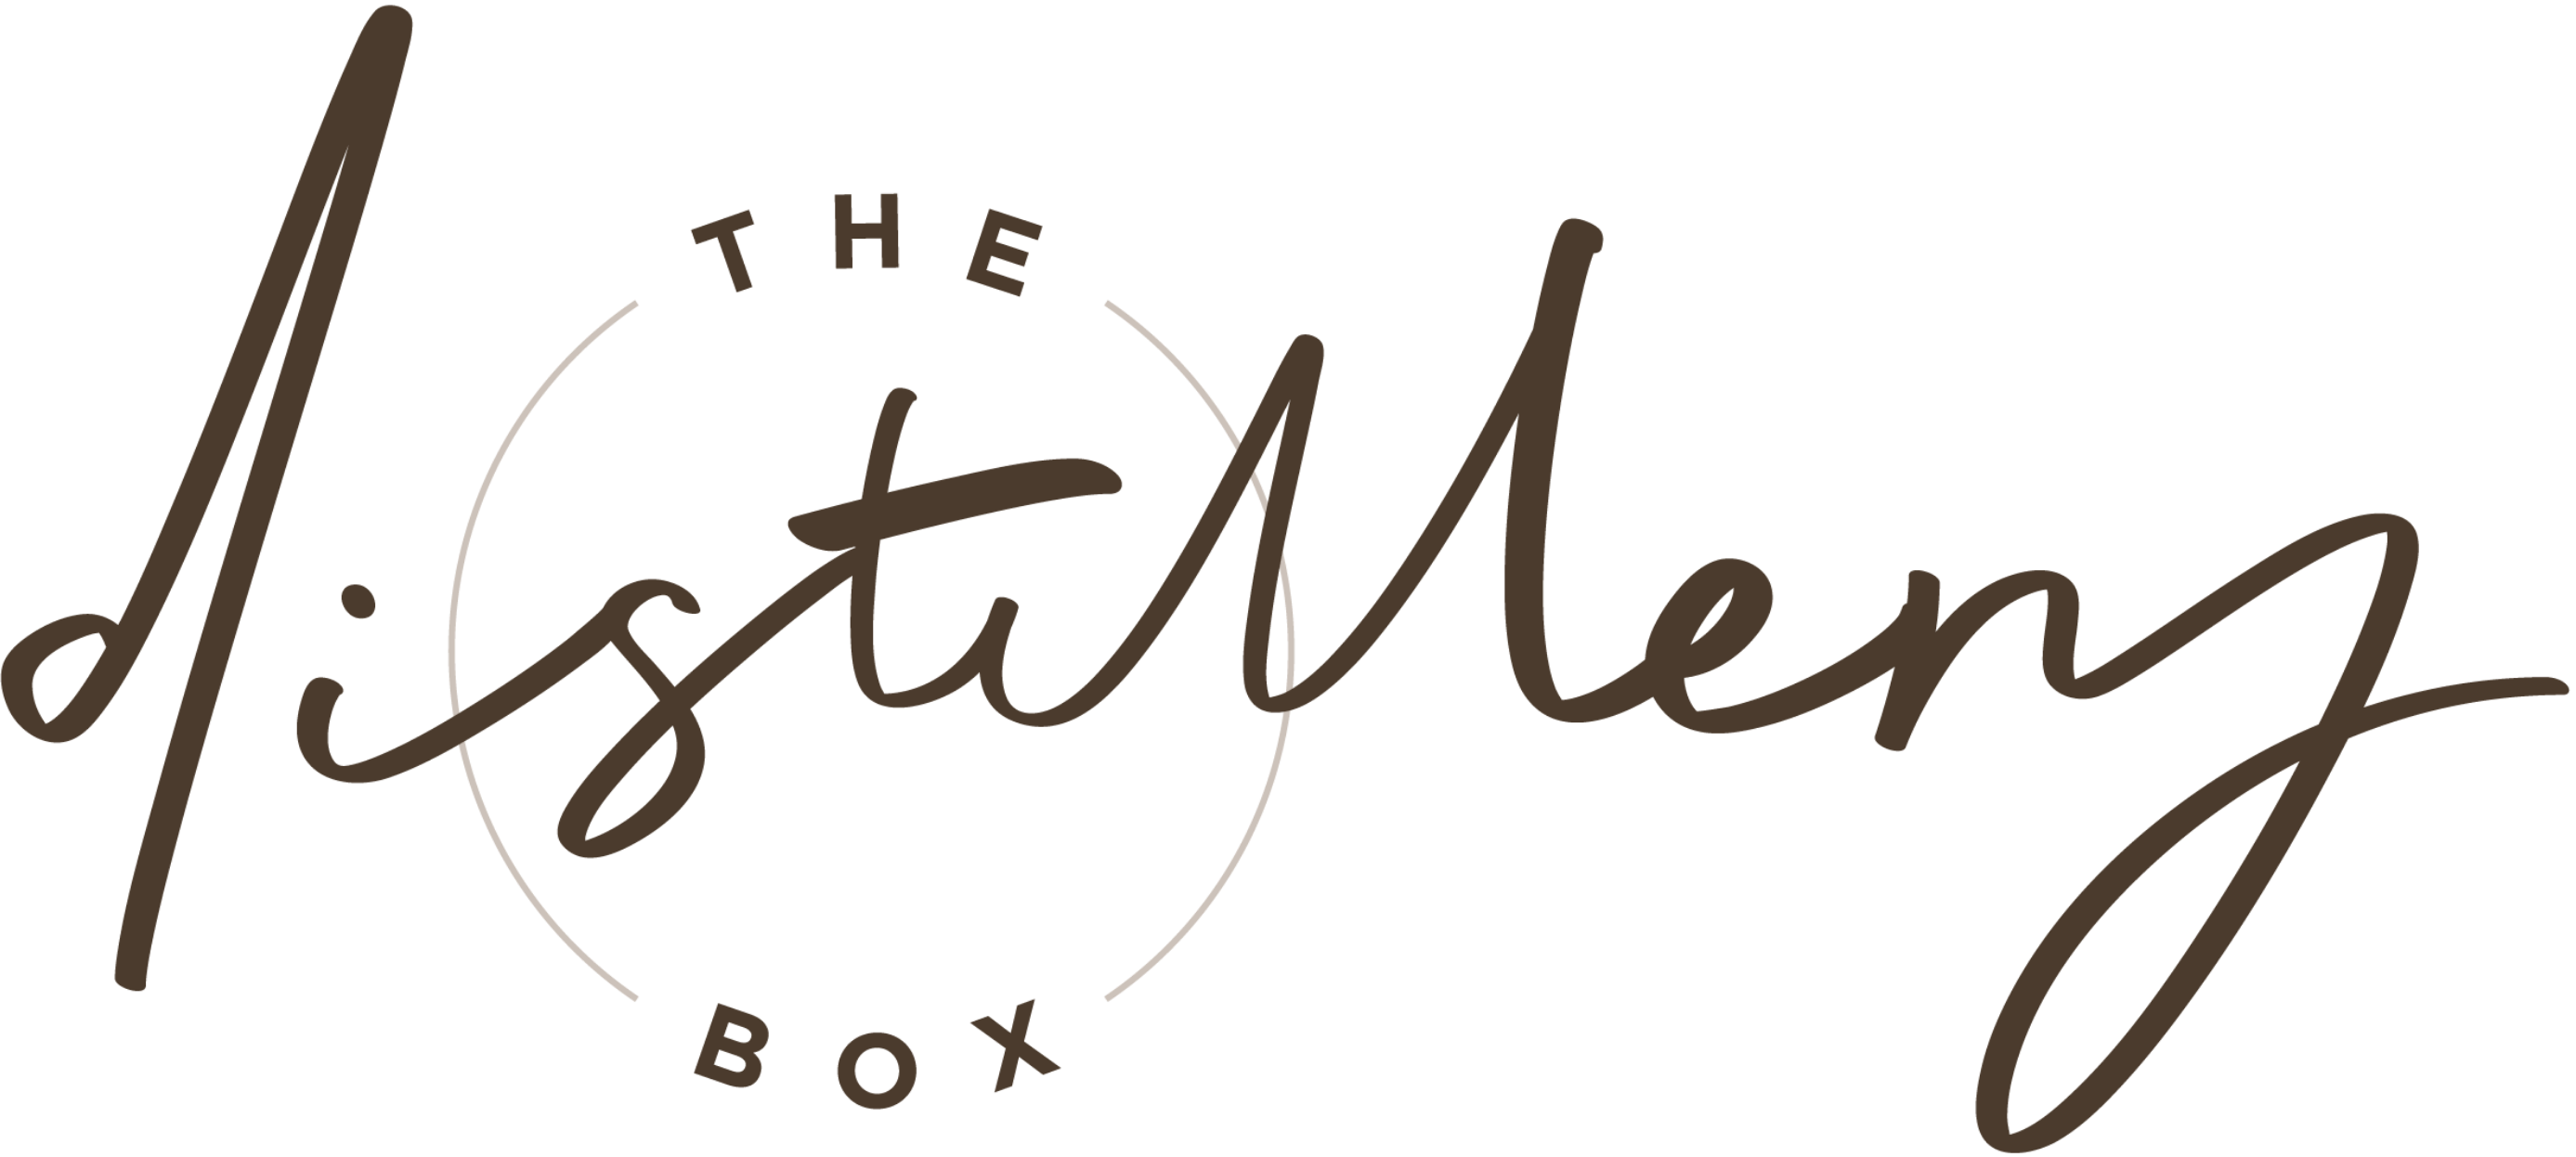 The Distillery Box logo.